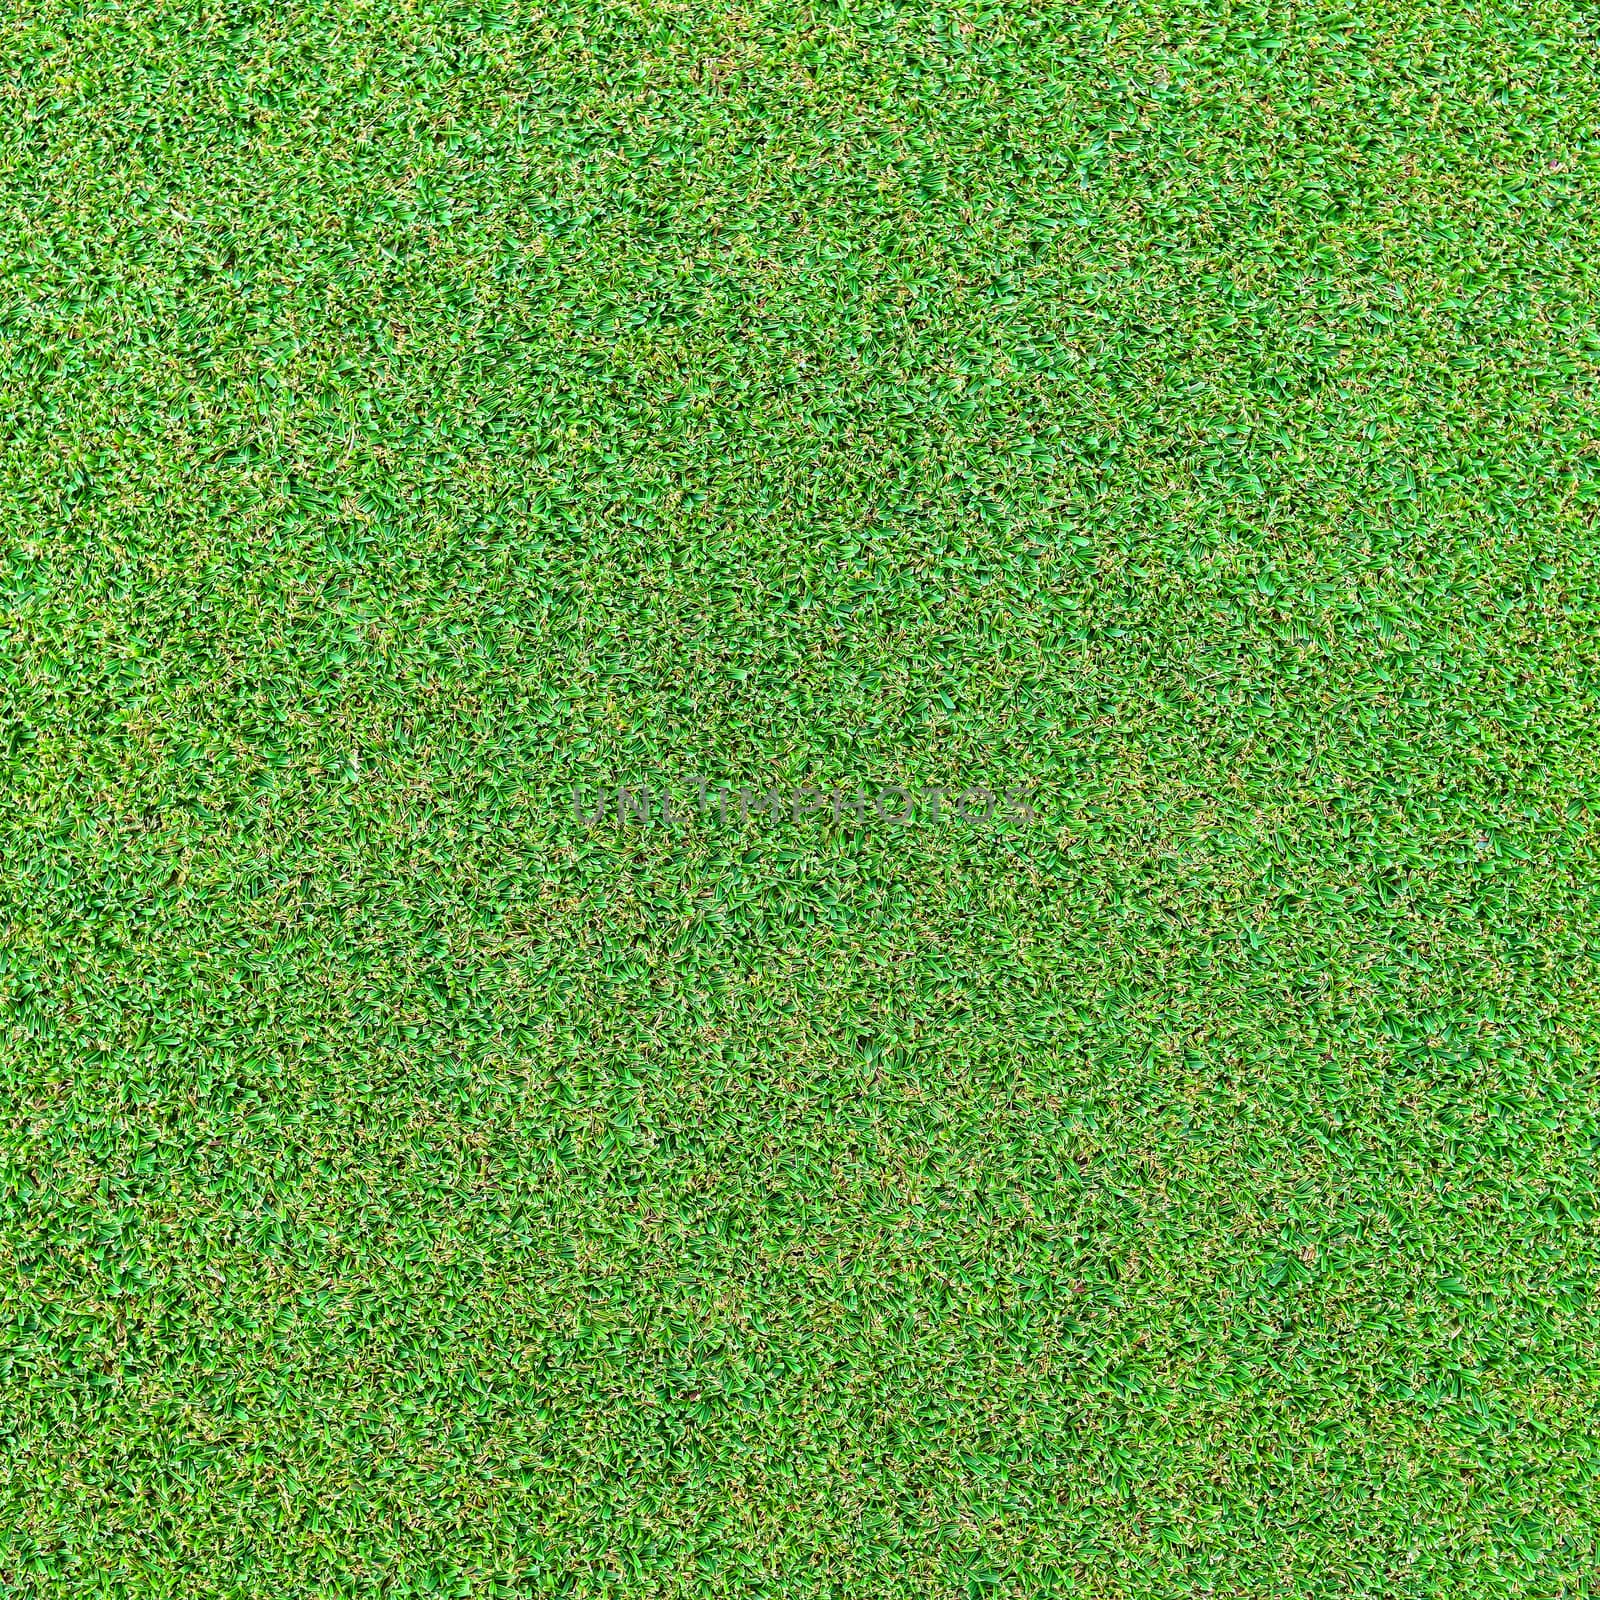 Grass by antpkr